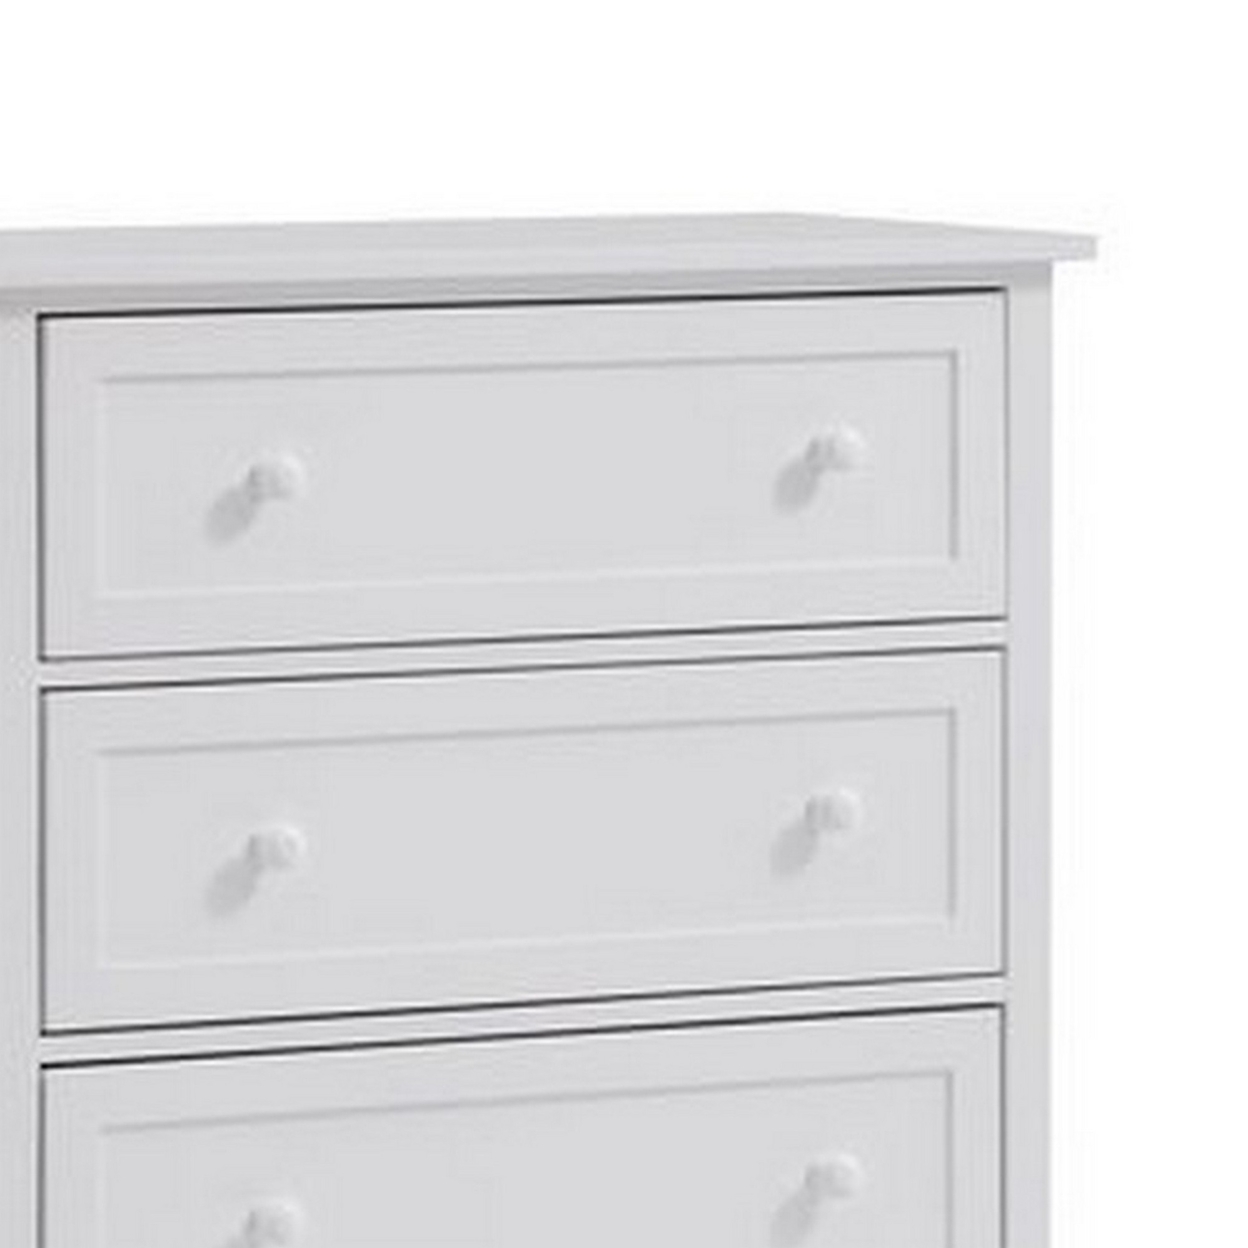 Mio 46 Inch 4 Drawer Tall Dresser Chest, Solid Wood, Glossy White- Saltoro Sherpi